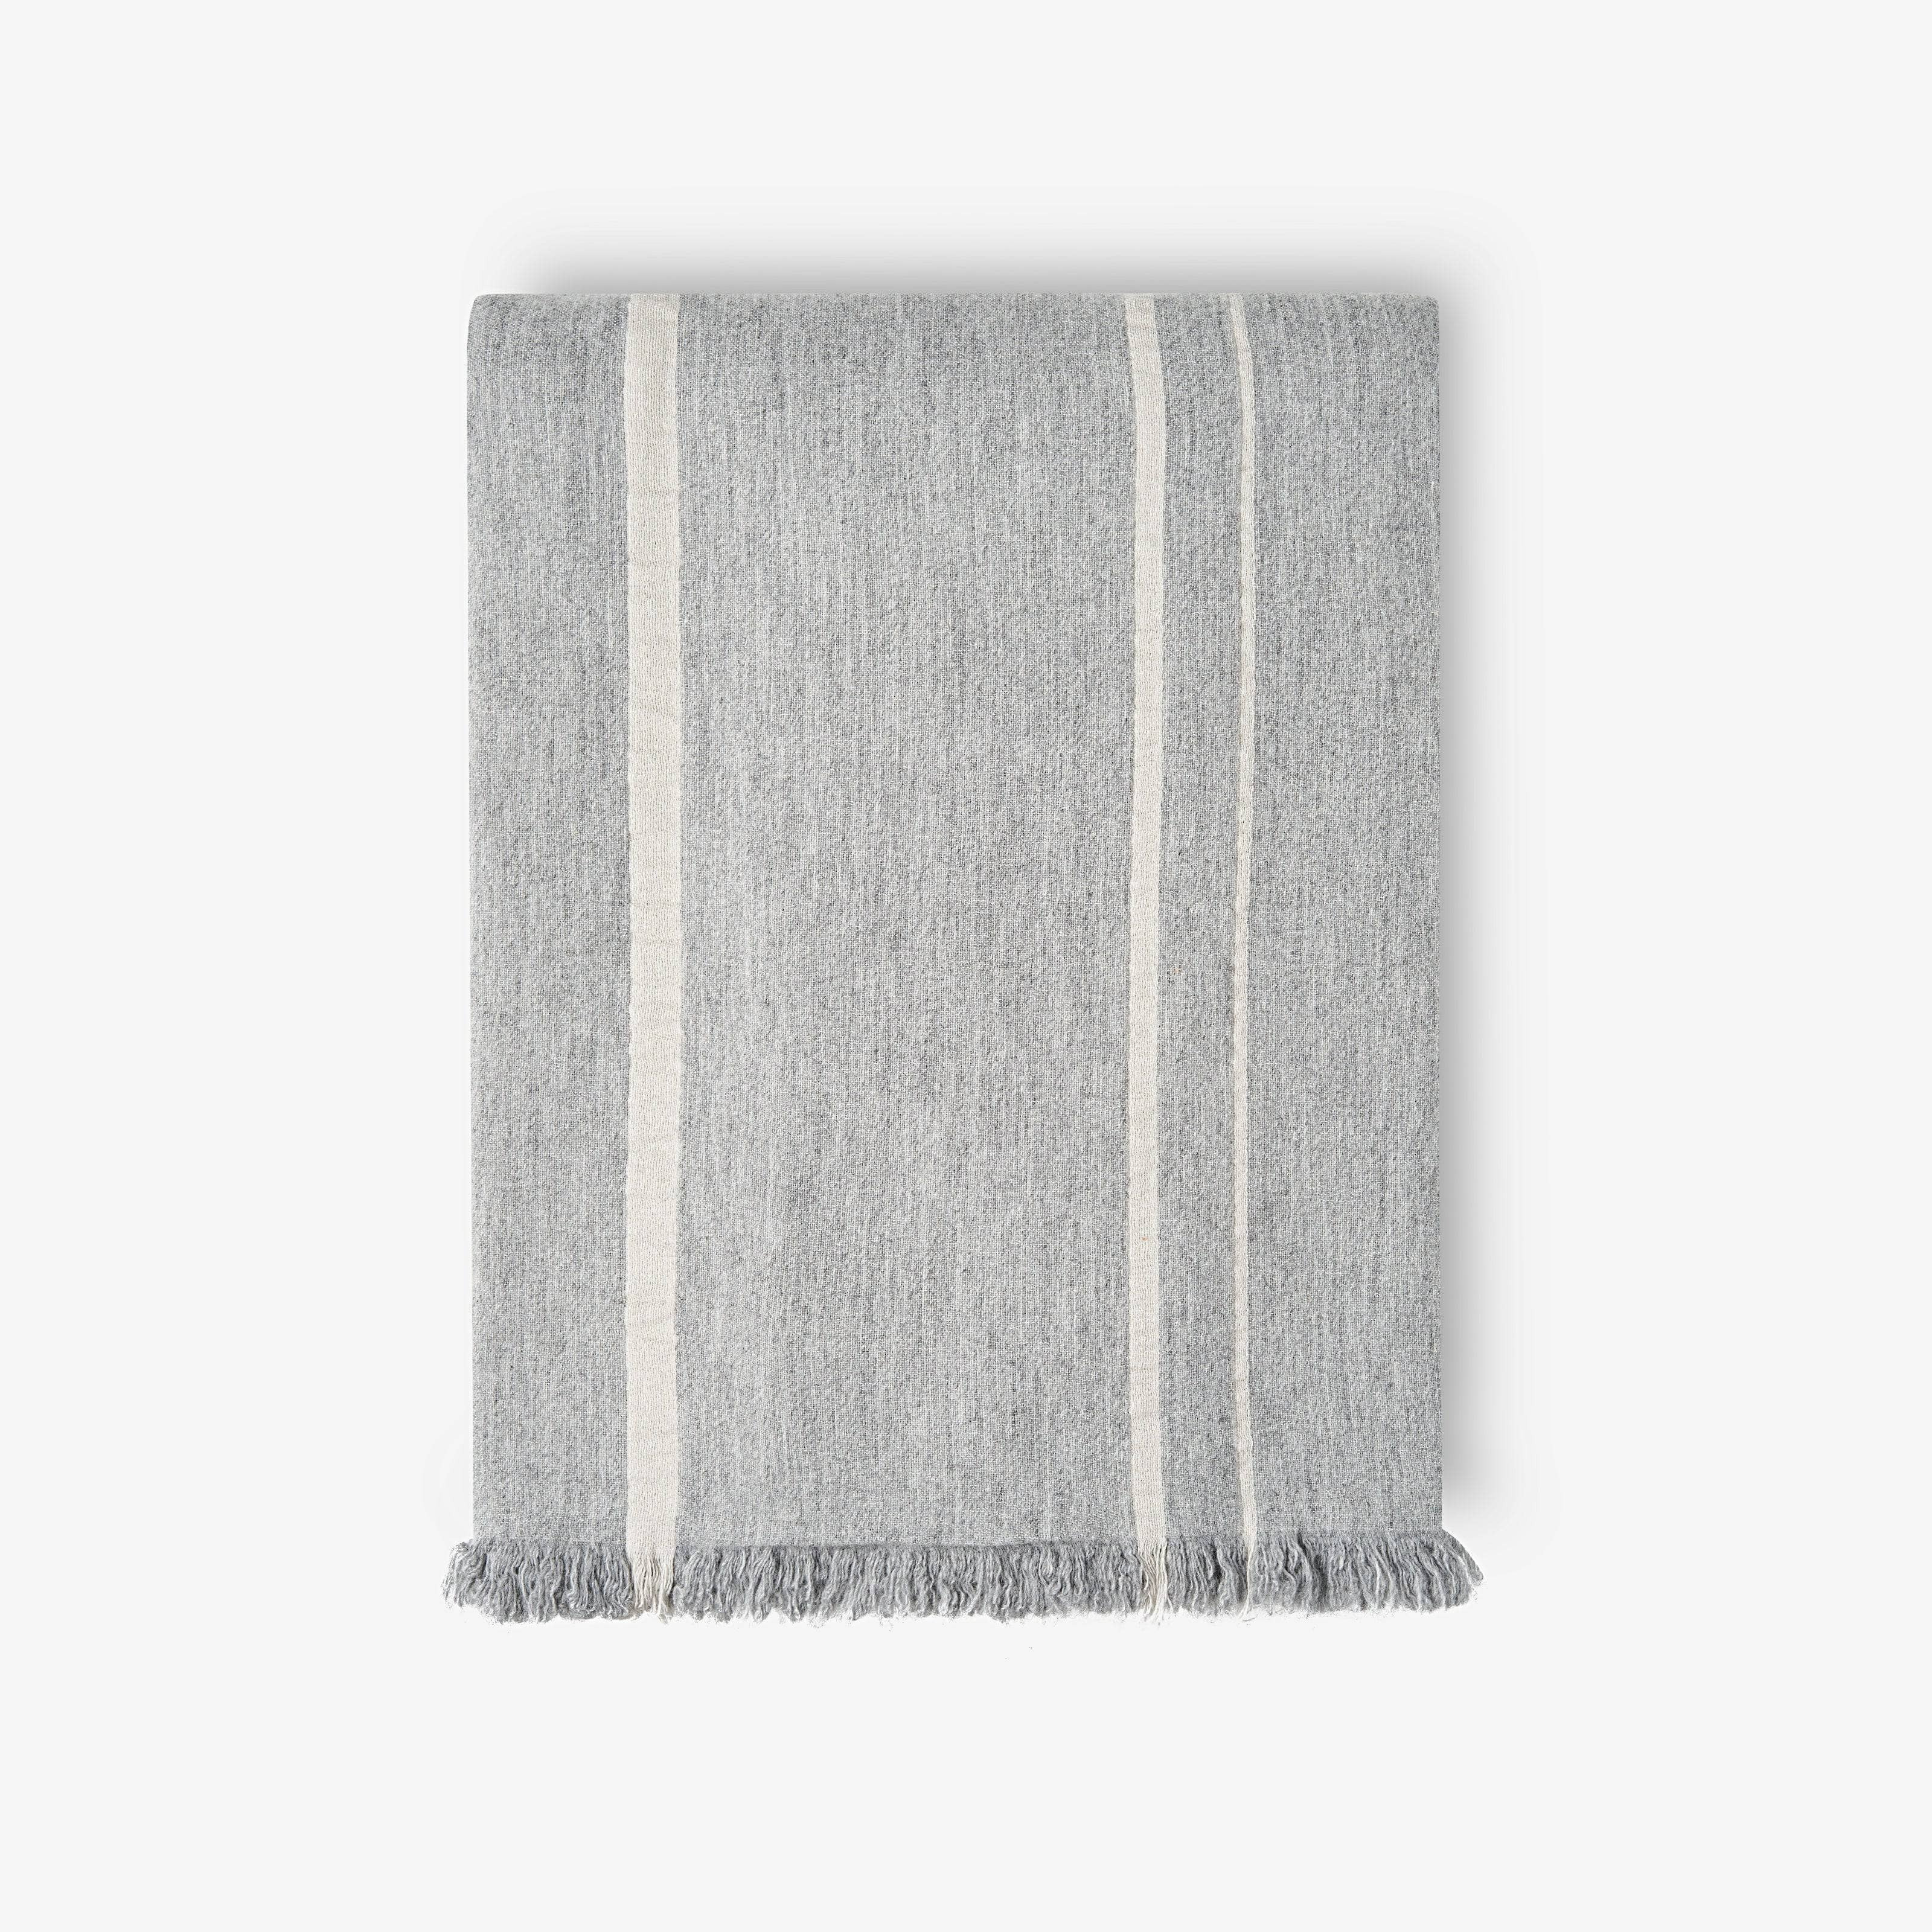 Andreo Wool Throw, Grey - Beige, 120x170 cm